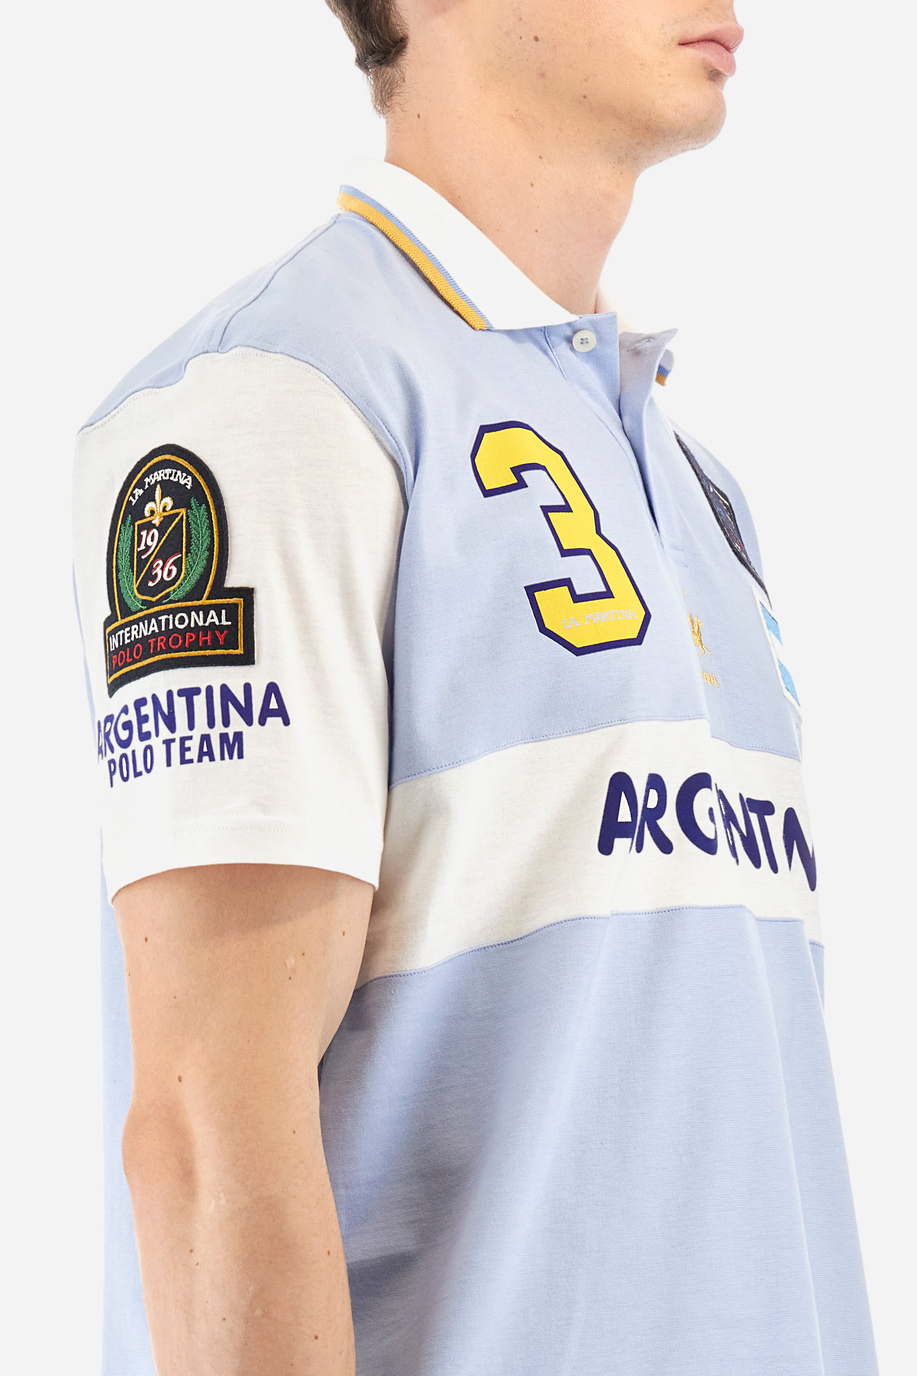 Short-sleeved Team polo shirt - Argentina - Polo Shirts | La Martina - Official Online Shop